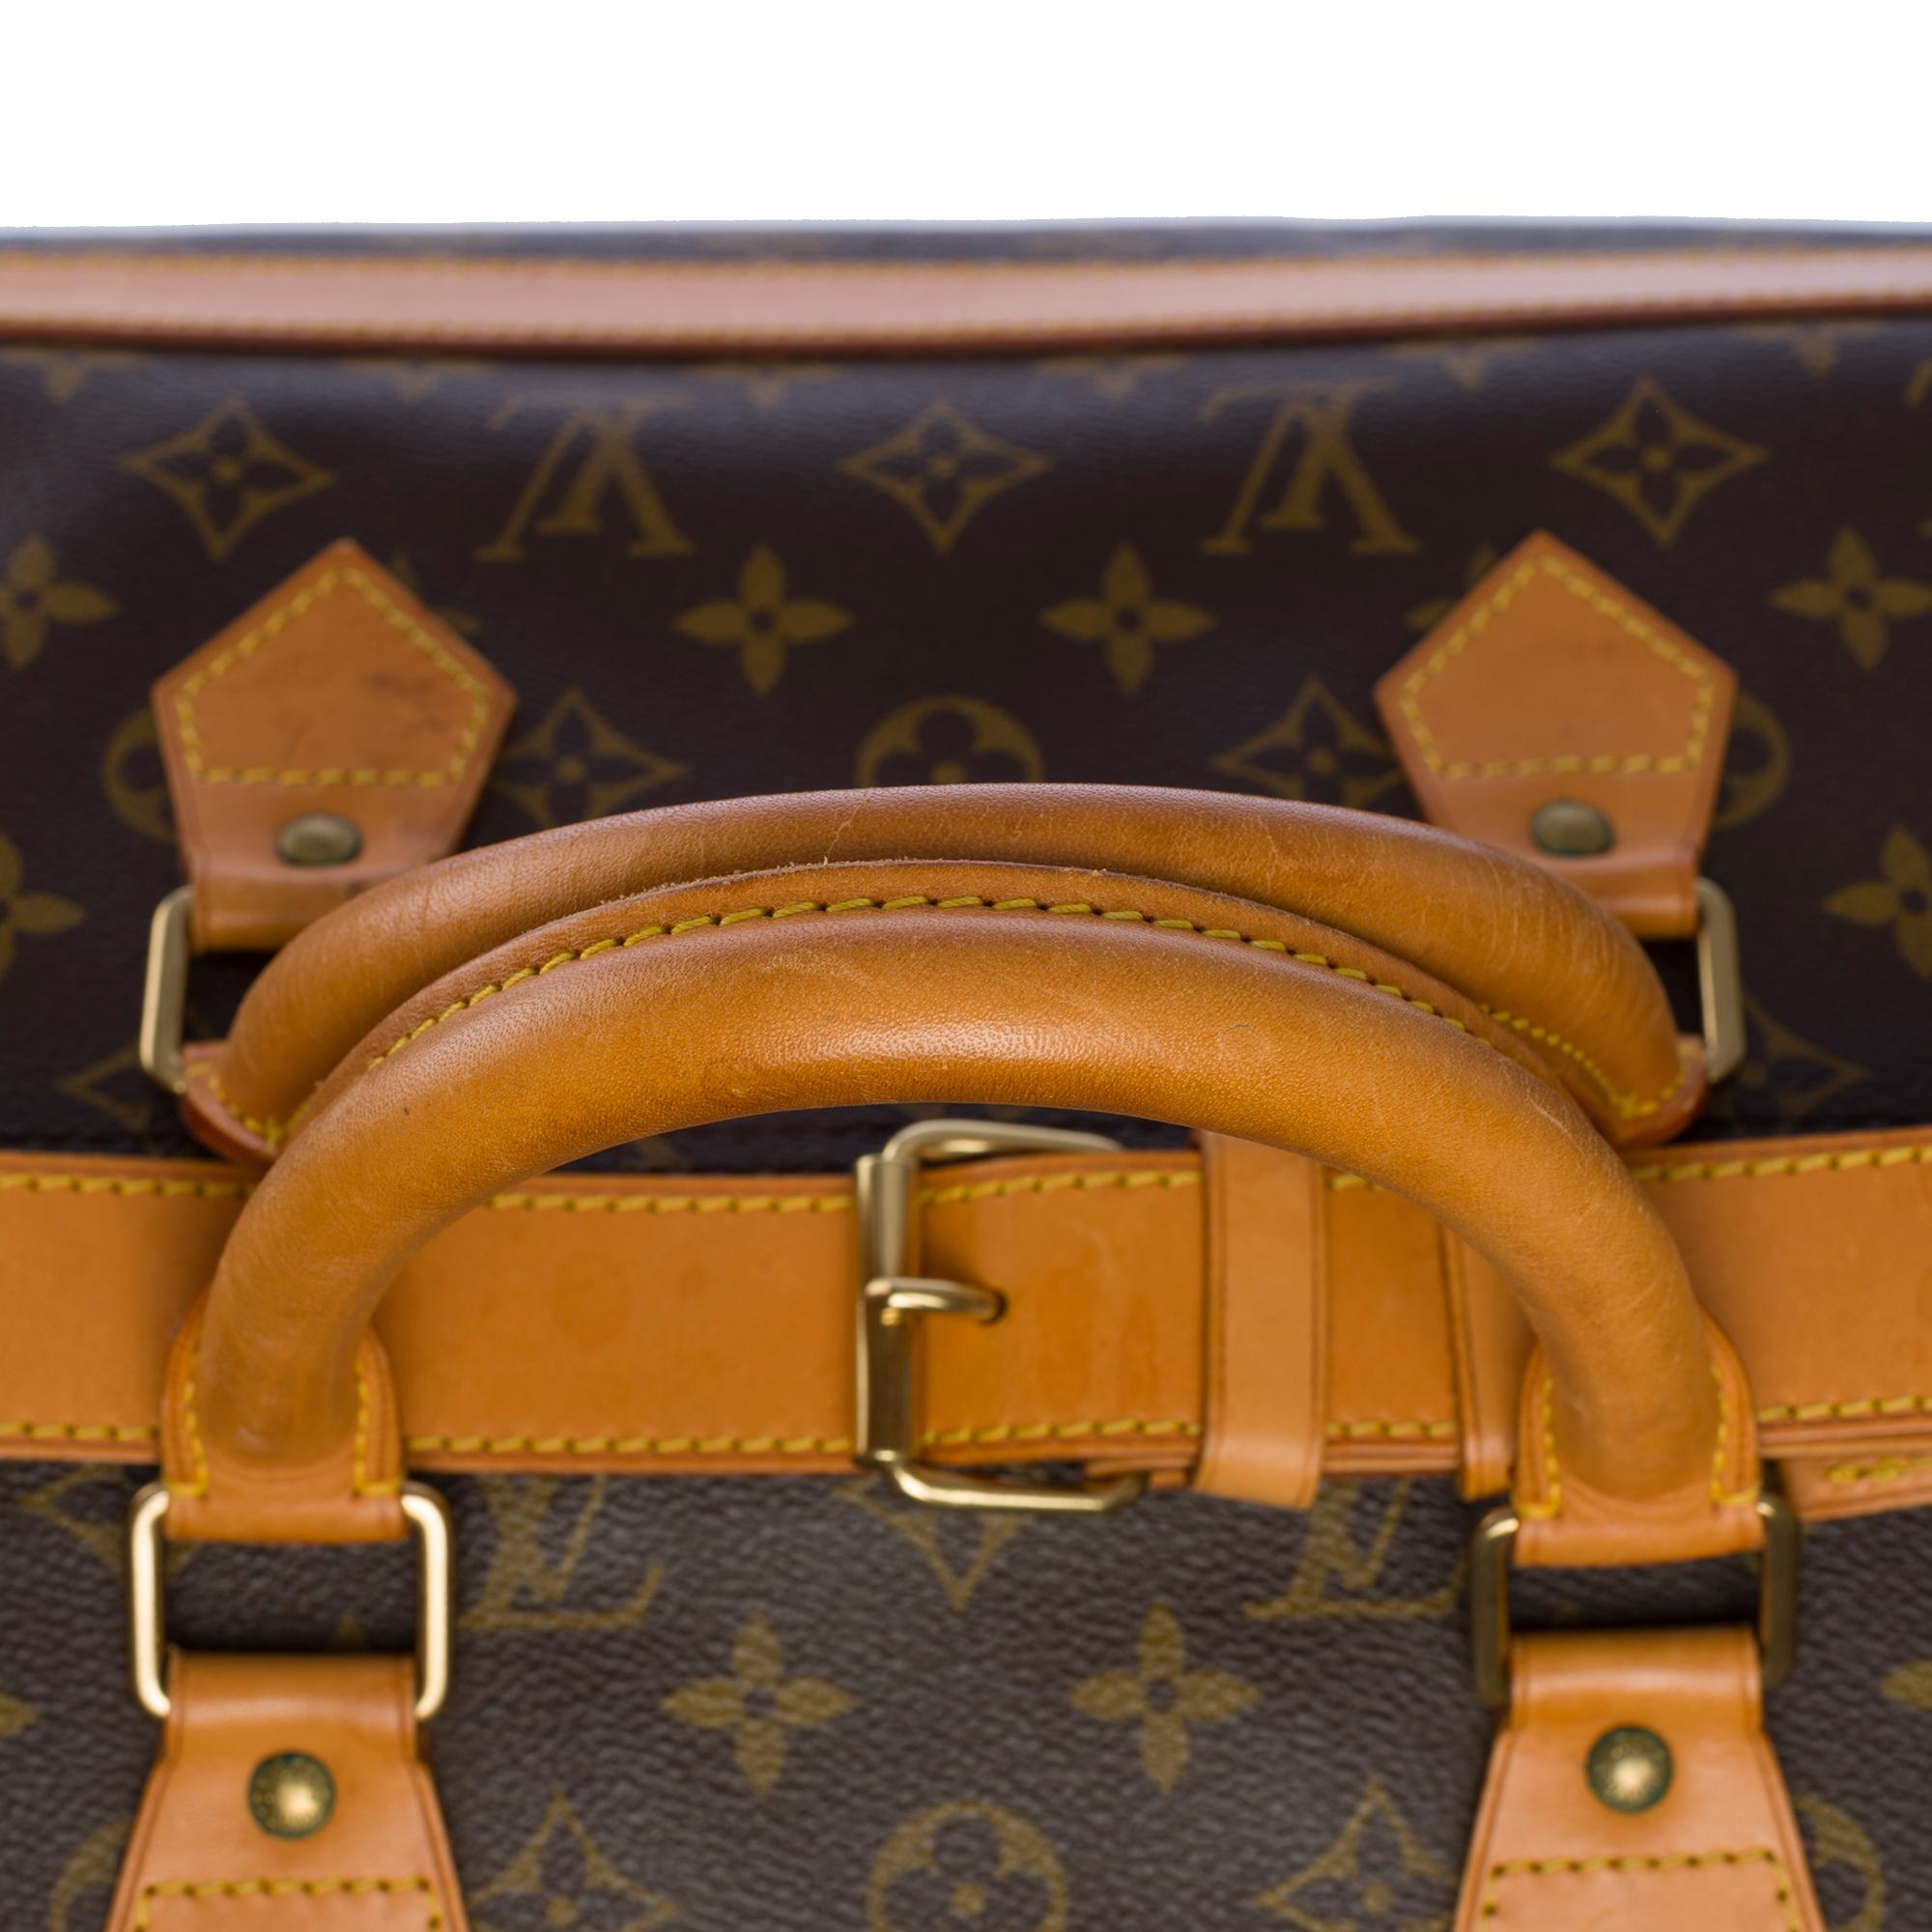 Rare Louis Vuitton Cruiser 50 Travel bag in brown Monogram canvas, GHW 3